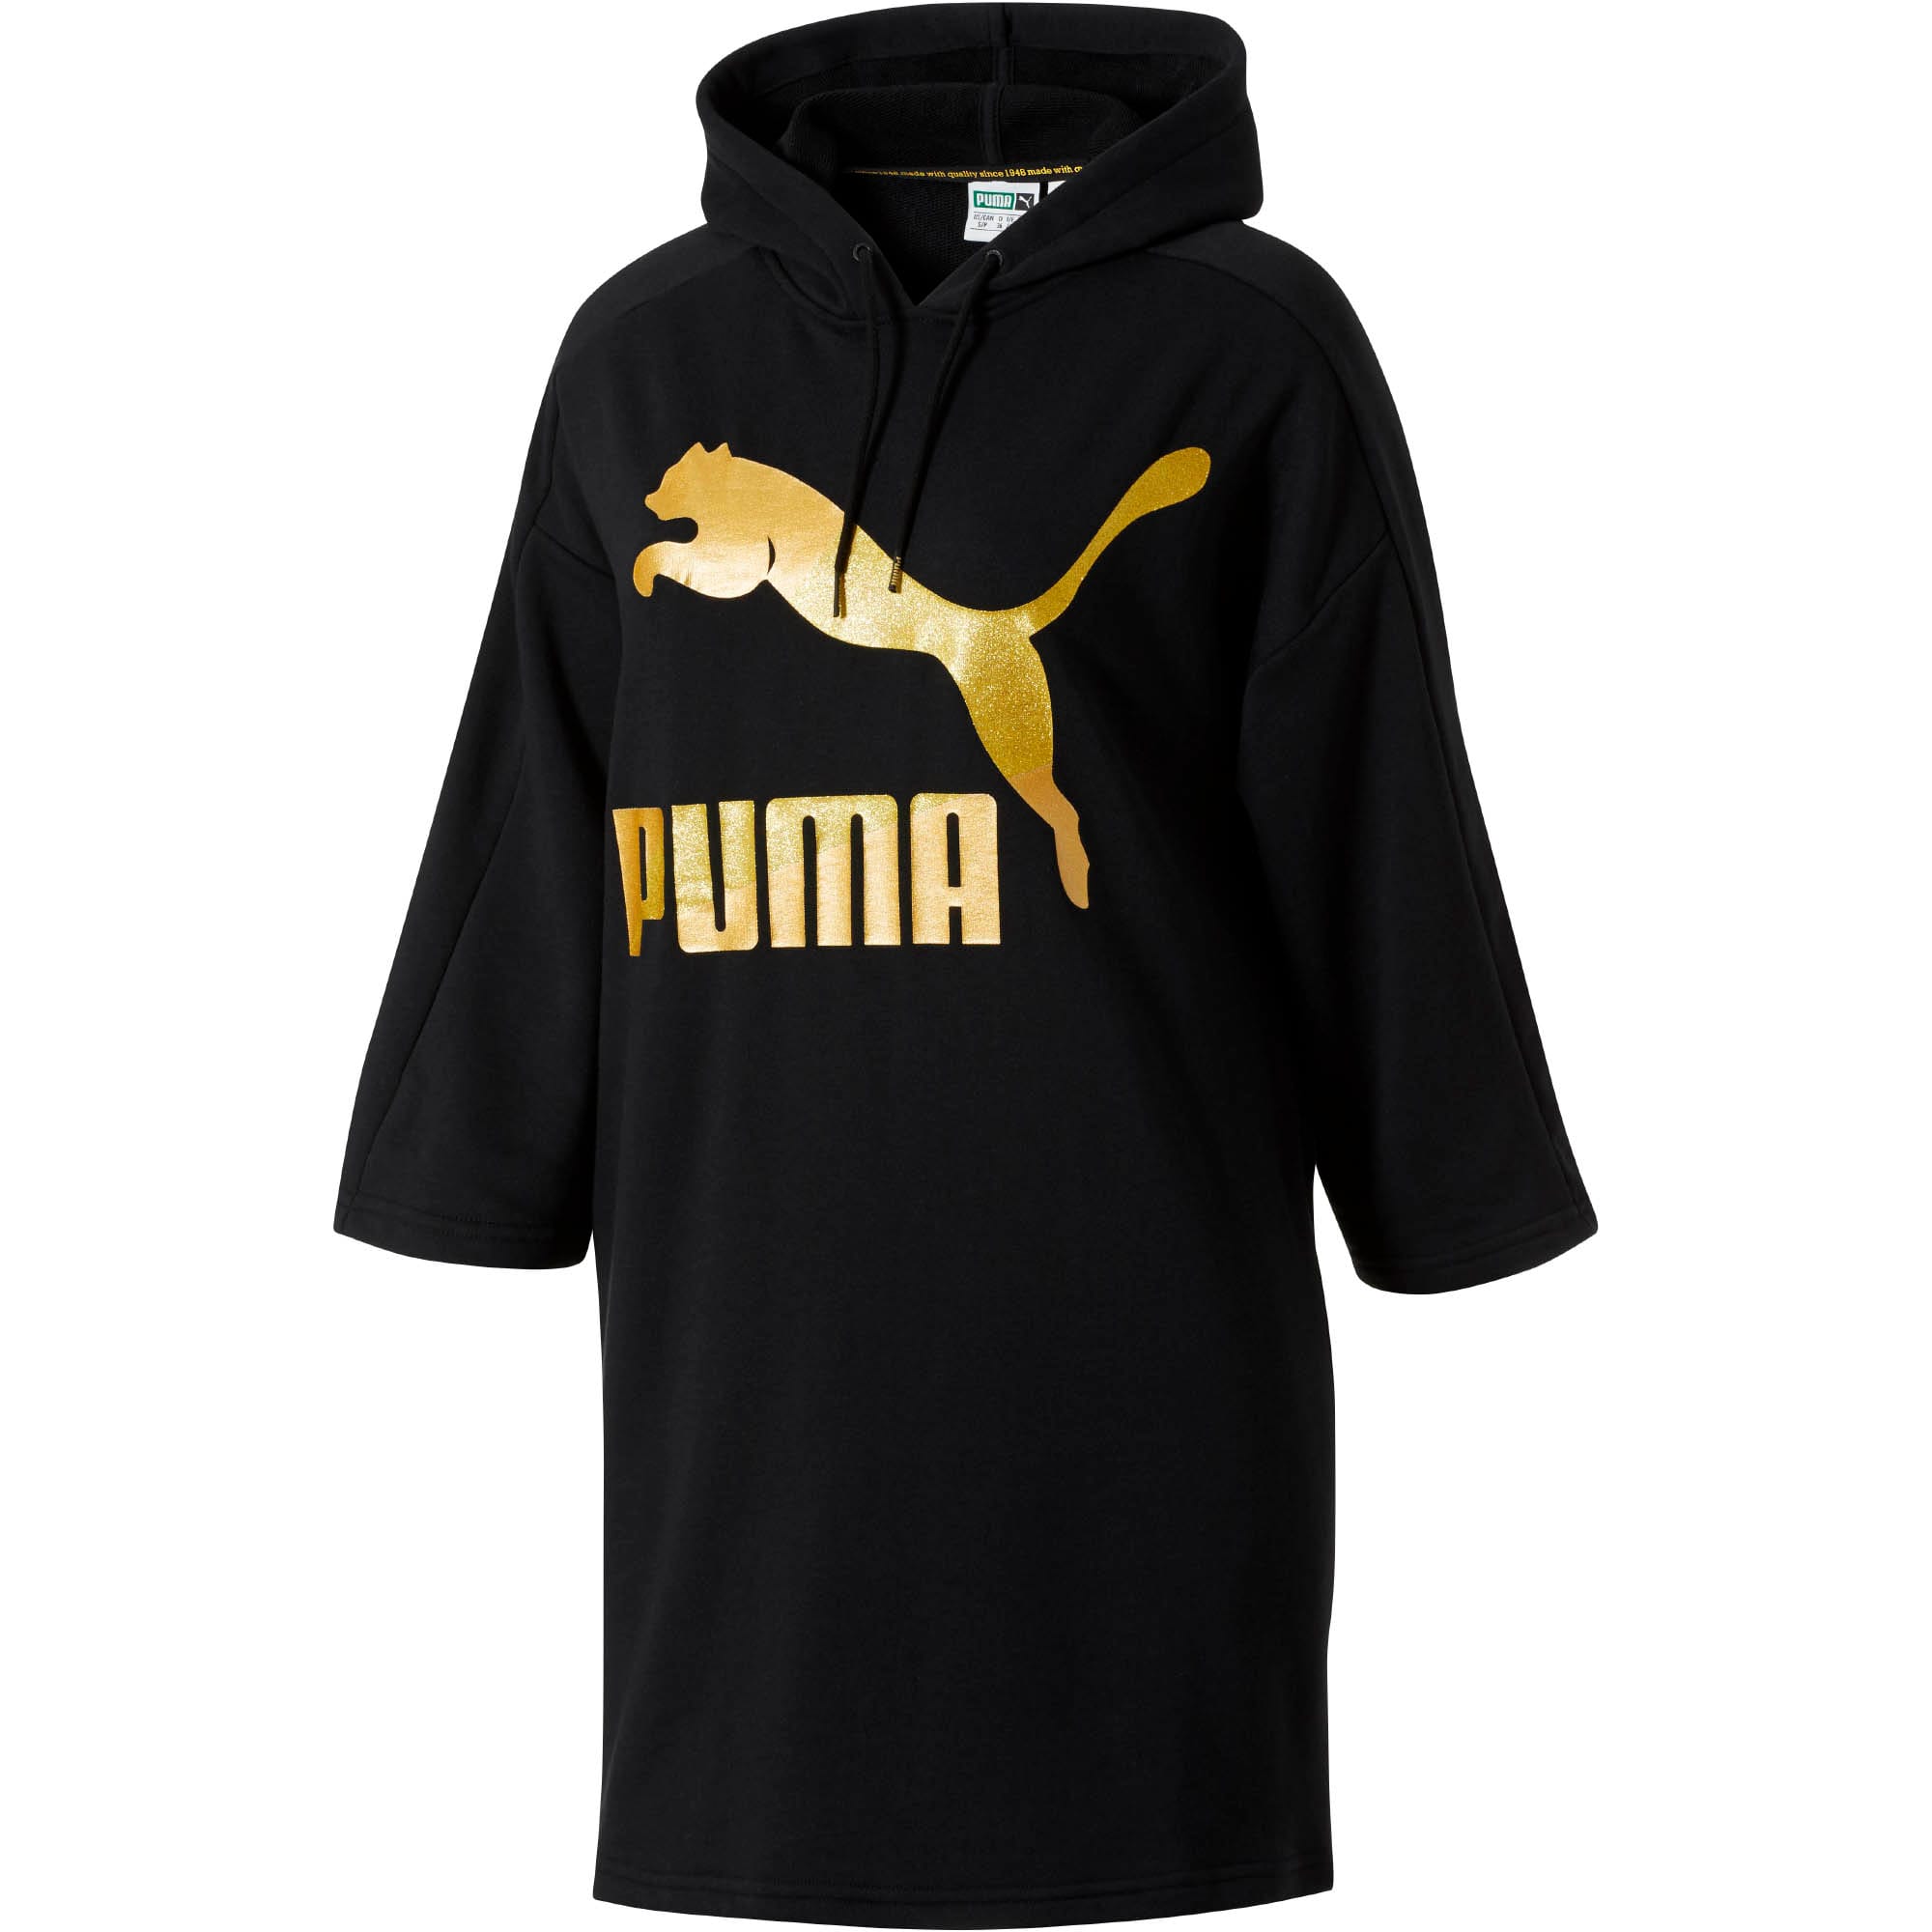 black and gold puma clothing